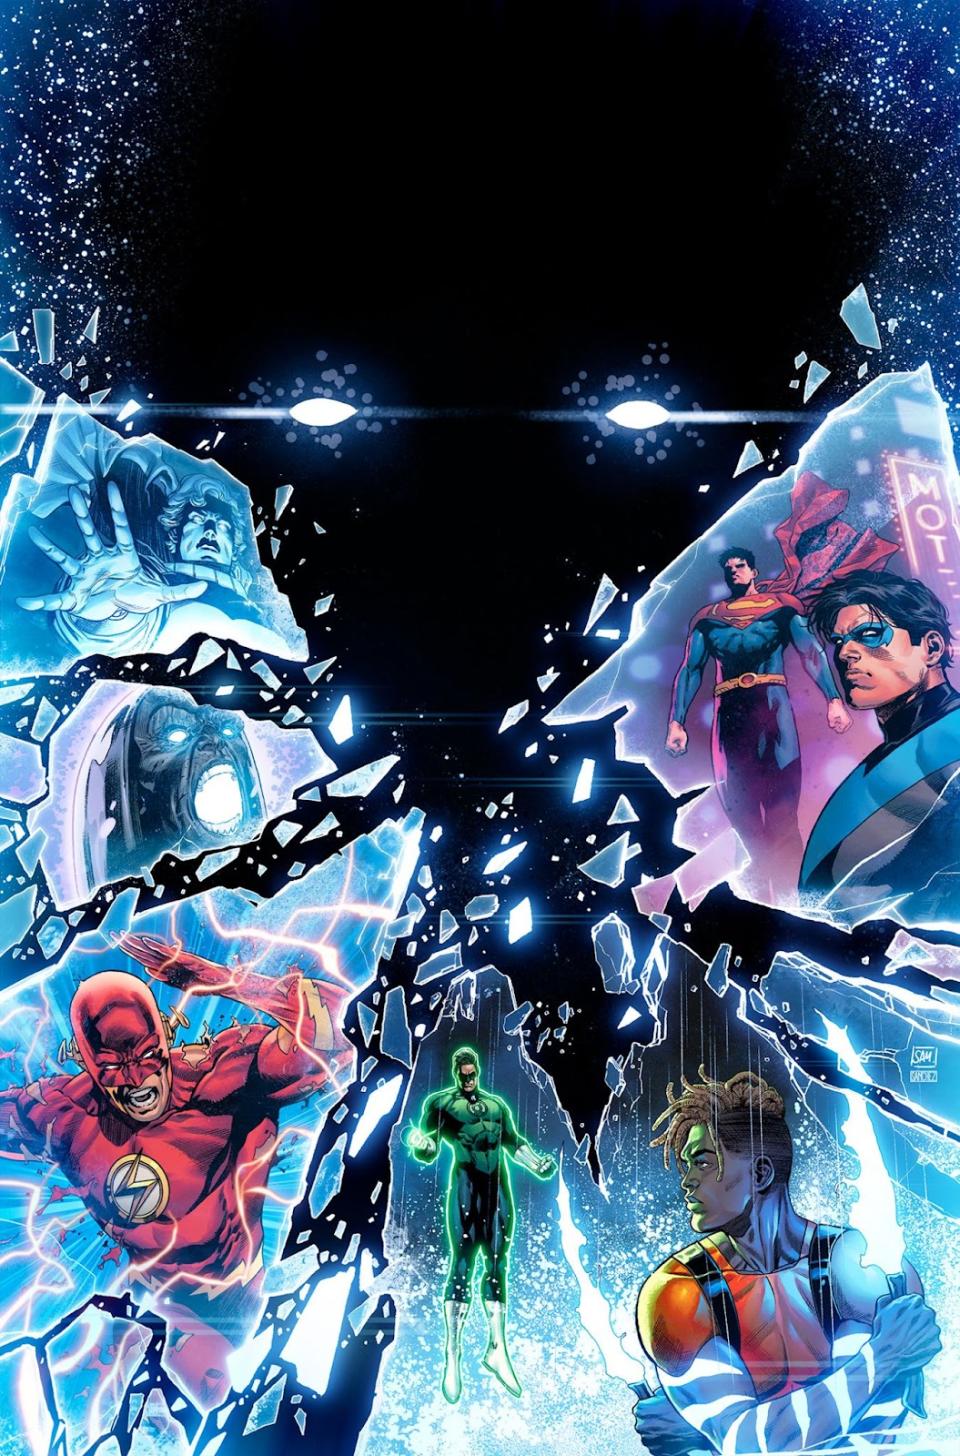 Justice League: Road to Dark Crisis #1 cover, artwork by Daniel Sampere